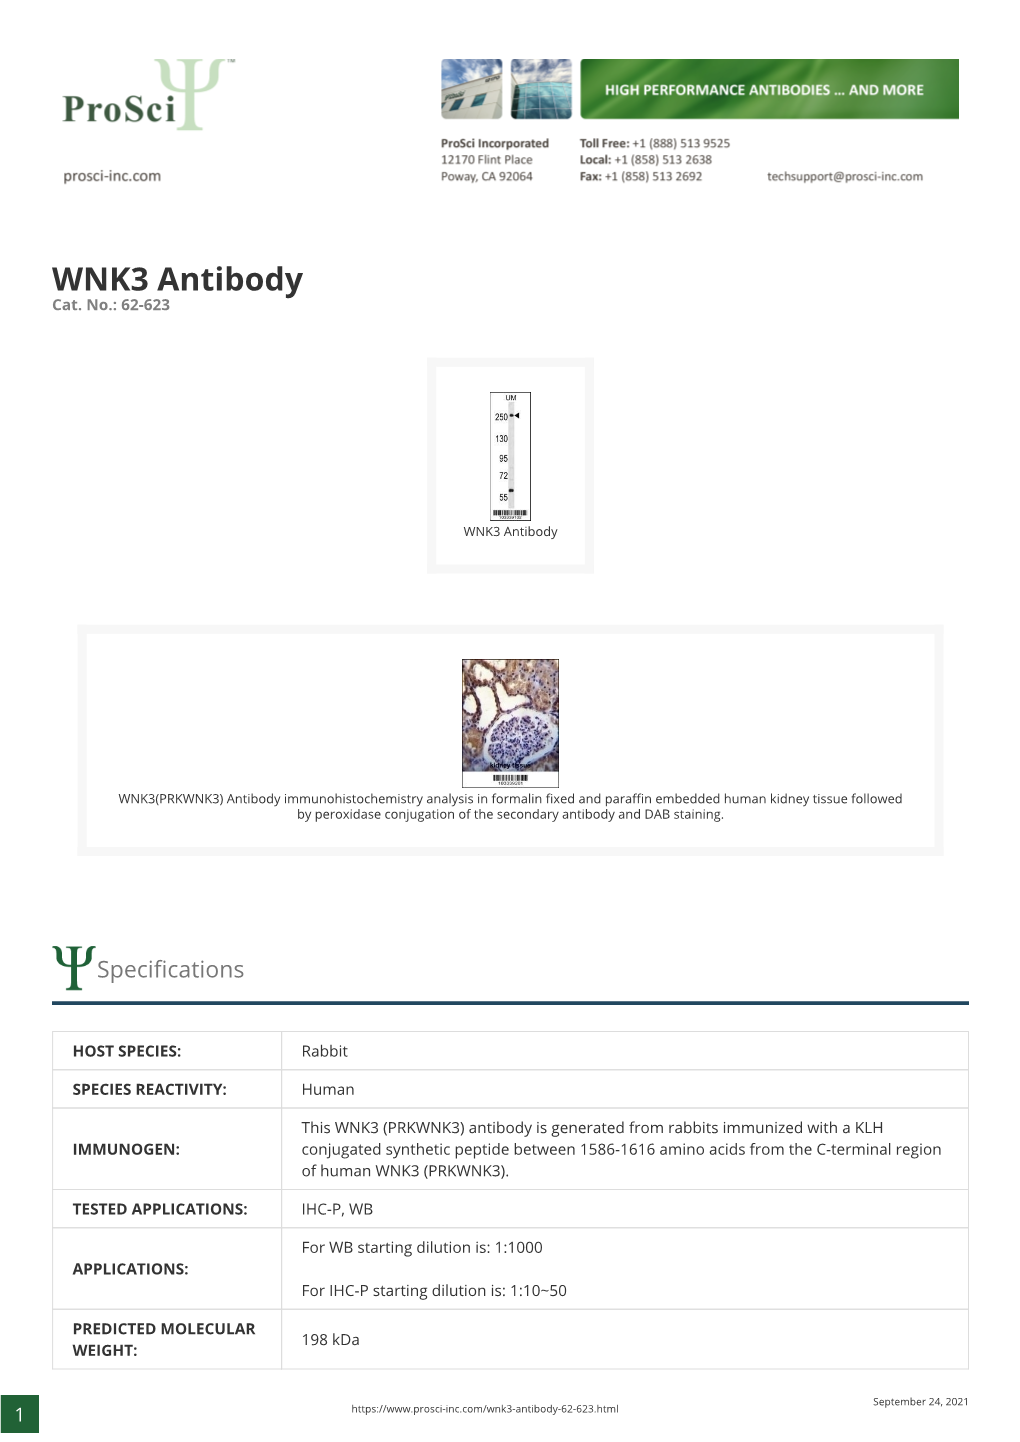 WNK3 Antibody Cat